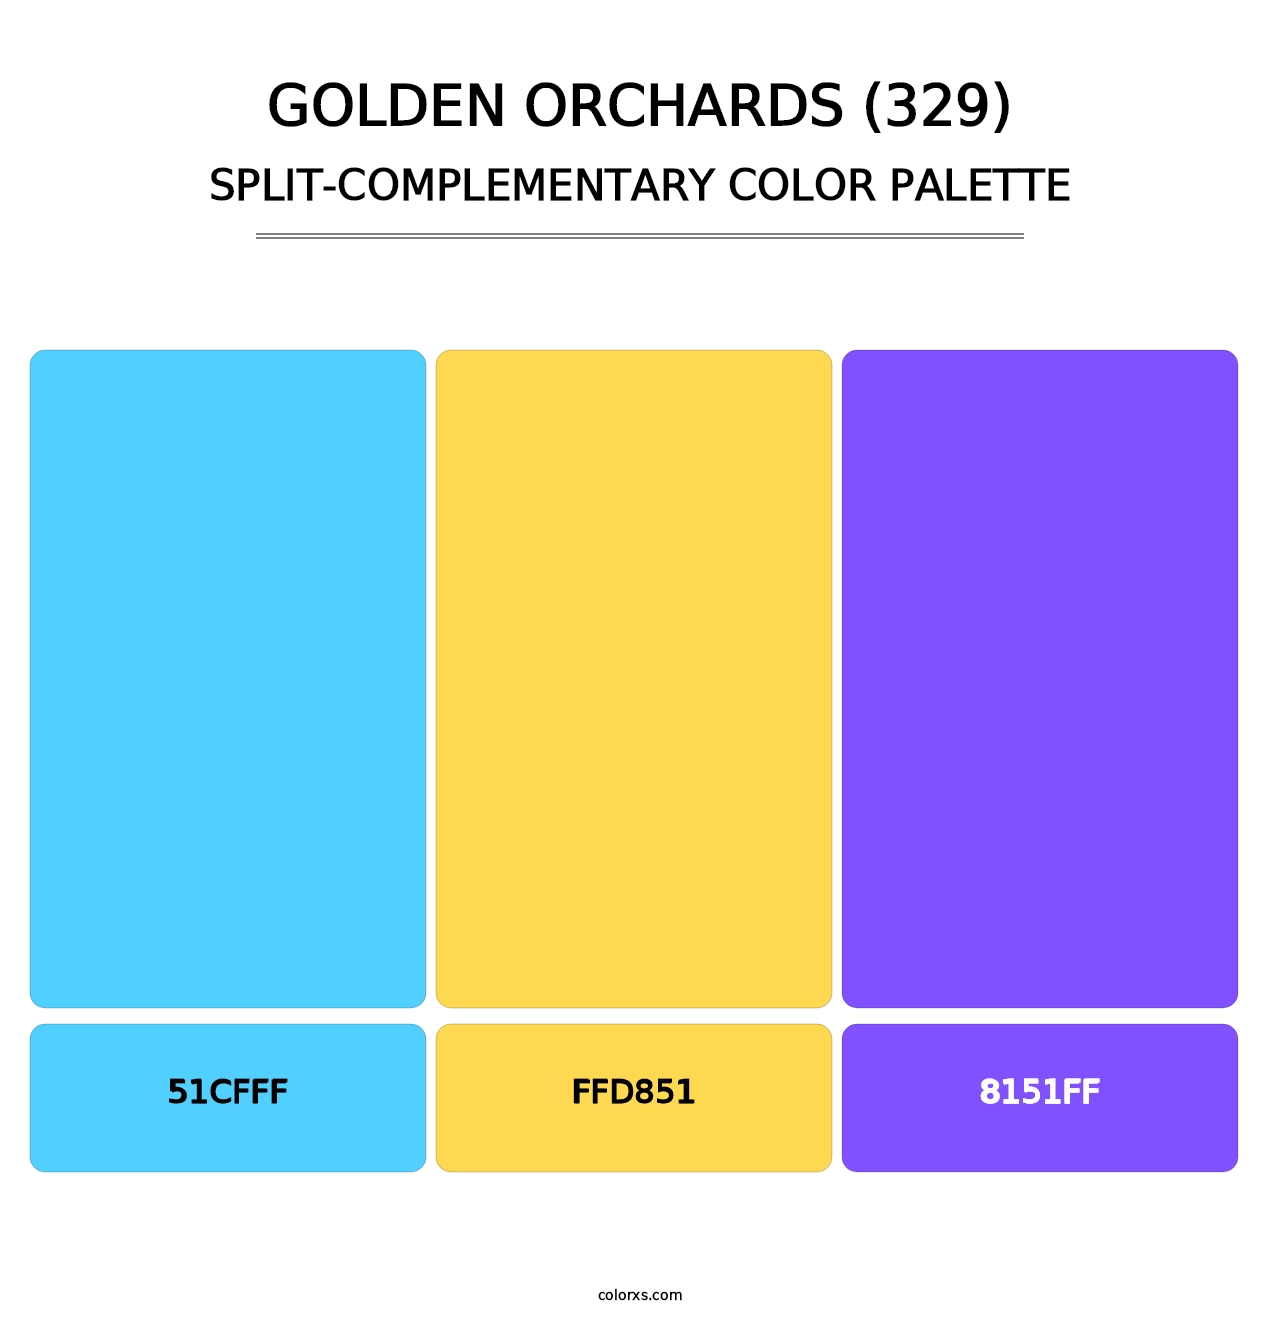 Golden Orchards (329) - Split-Complementary Color Palette